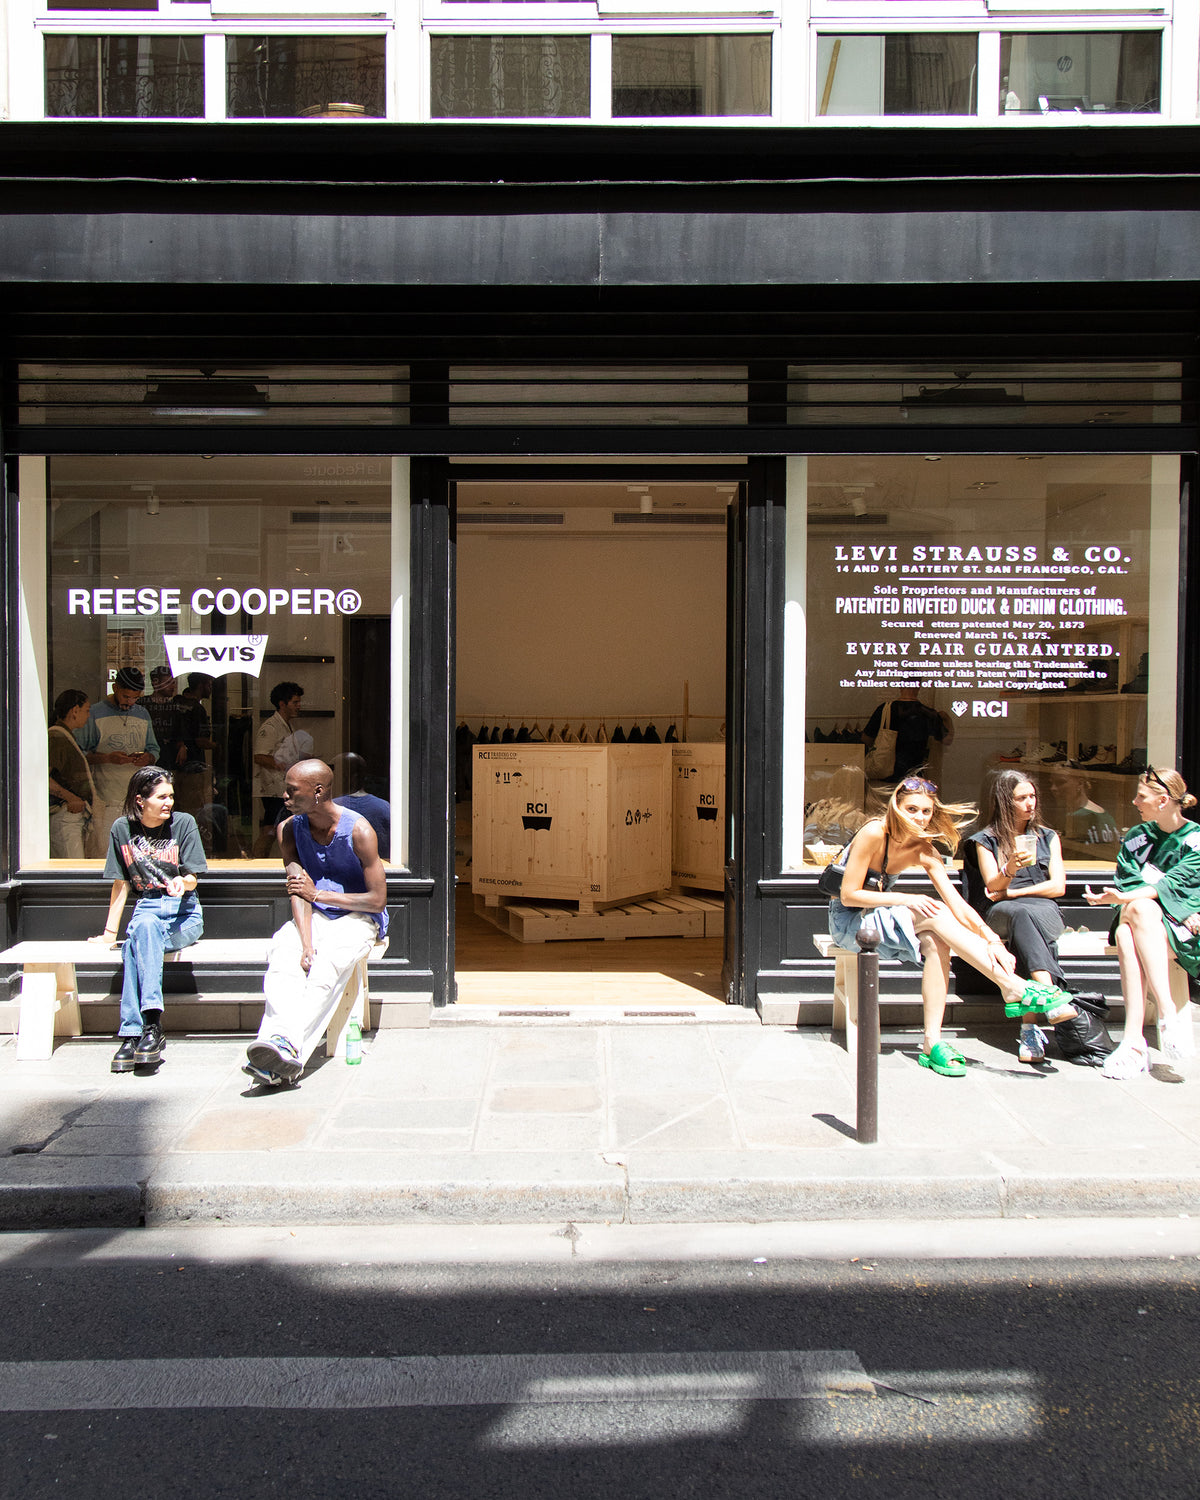 RC x Levi's Paris Pop-Up Store – REESE COOPER®